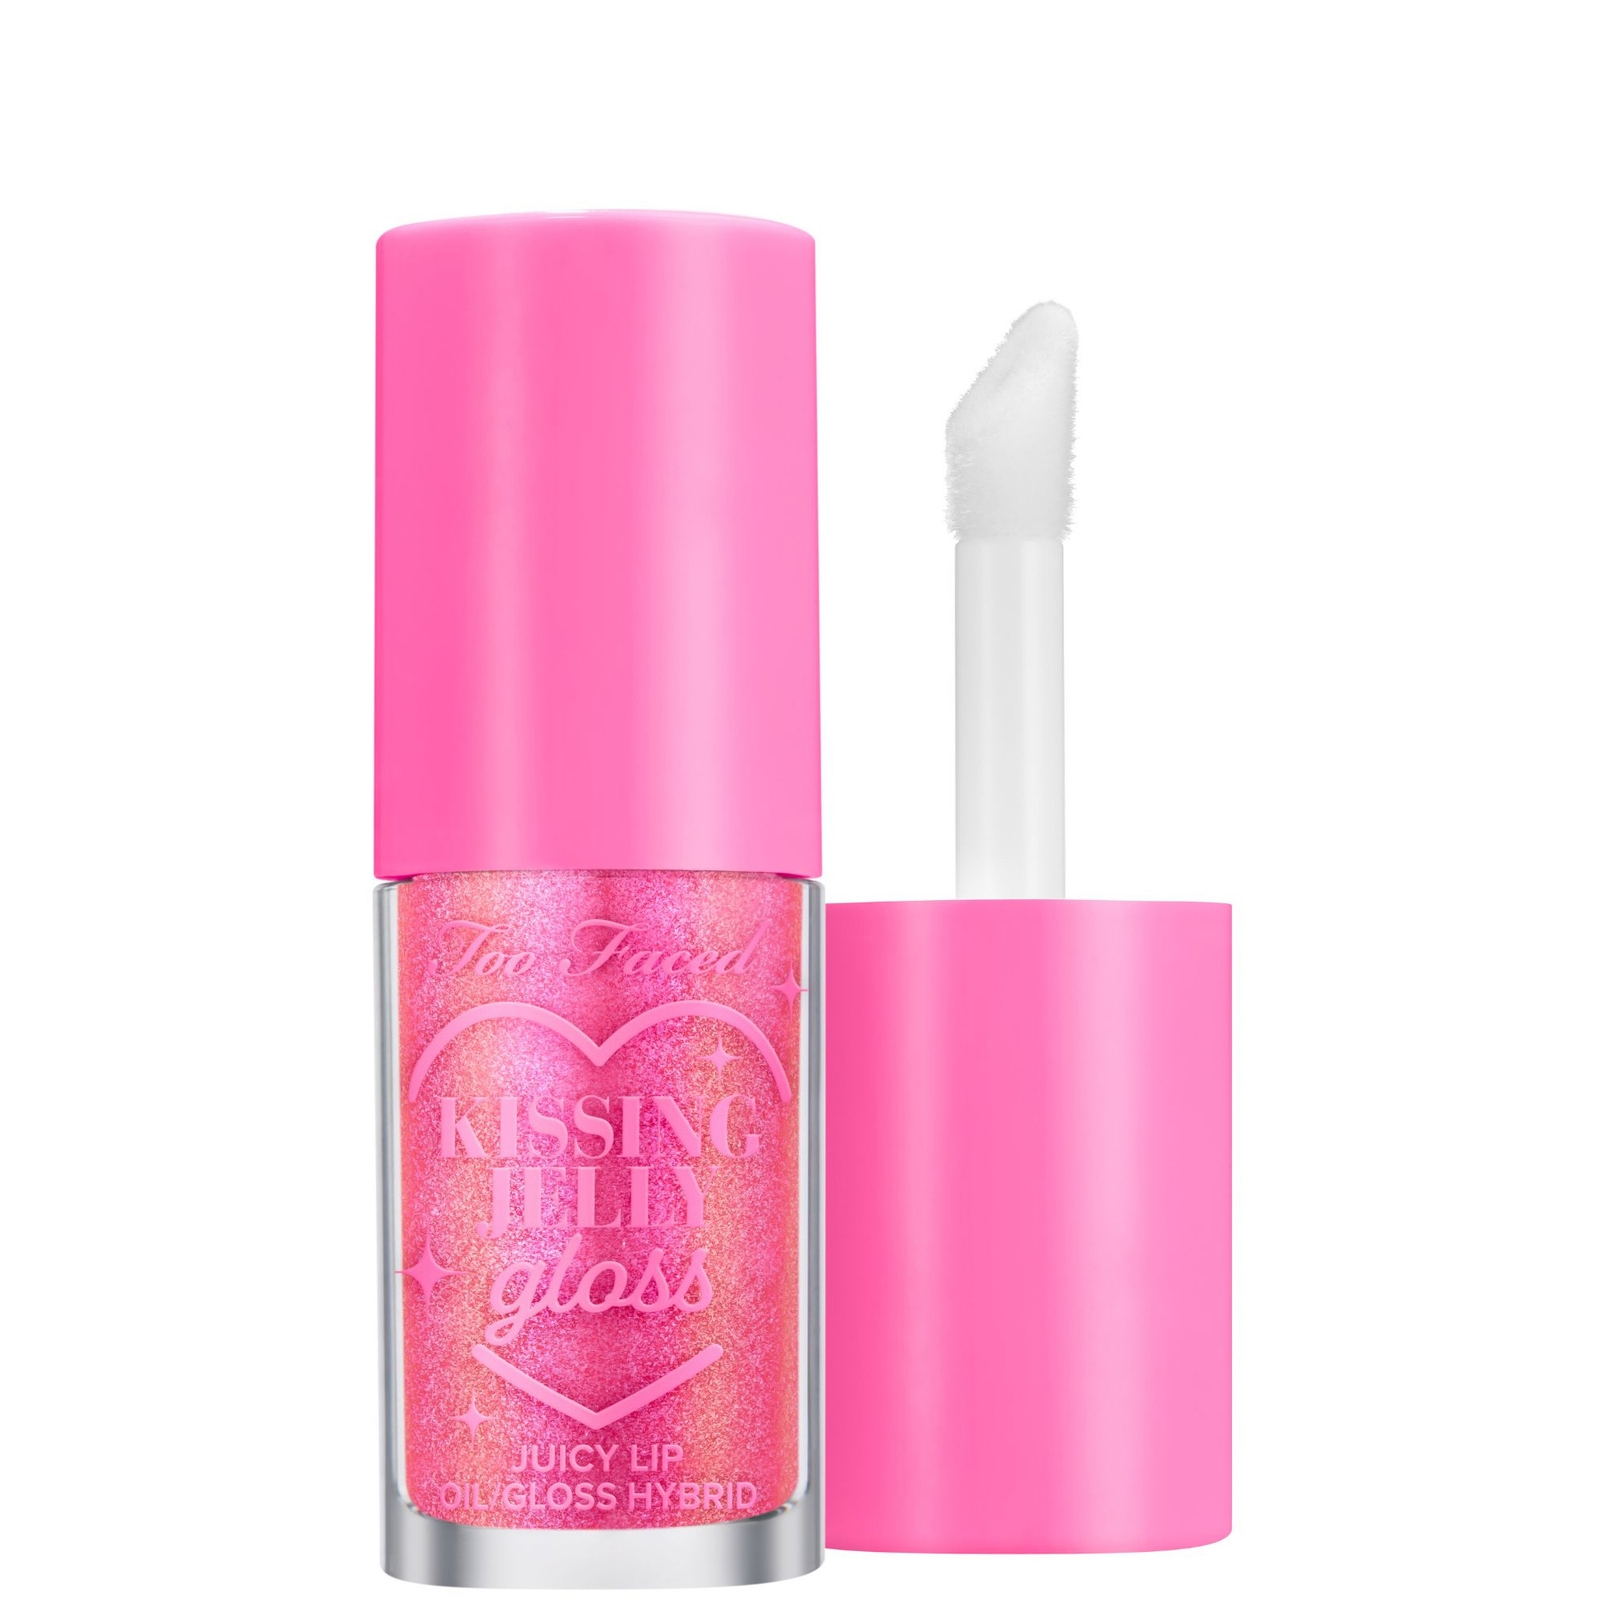 Too Faced Kissing Jelly Lip Oil Gloss 4.5ml - (Various Shades) - Bubblegum